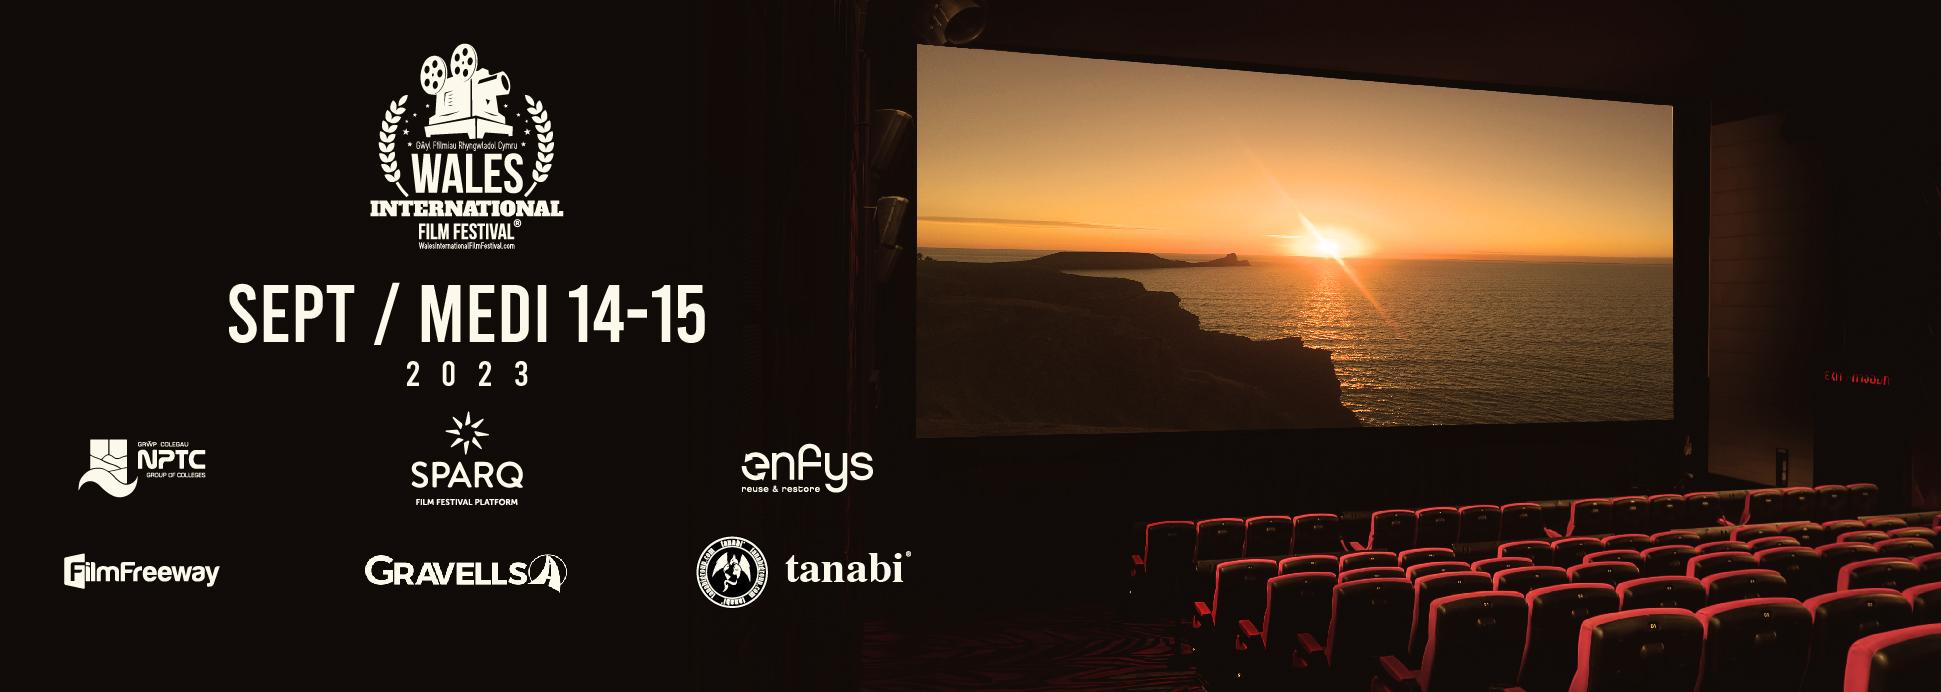 Wales International Film Festival 2023